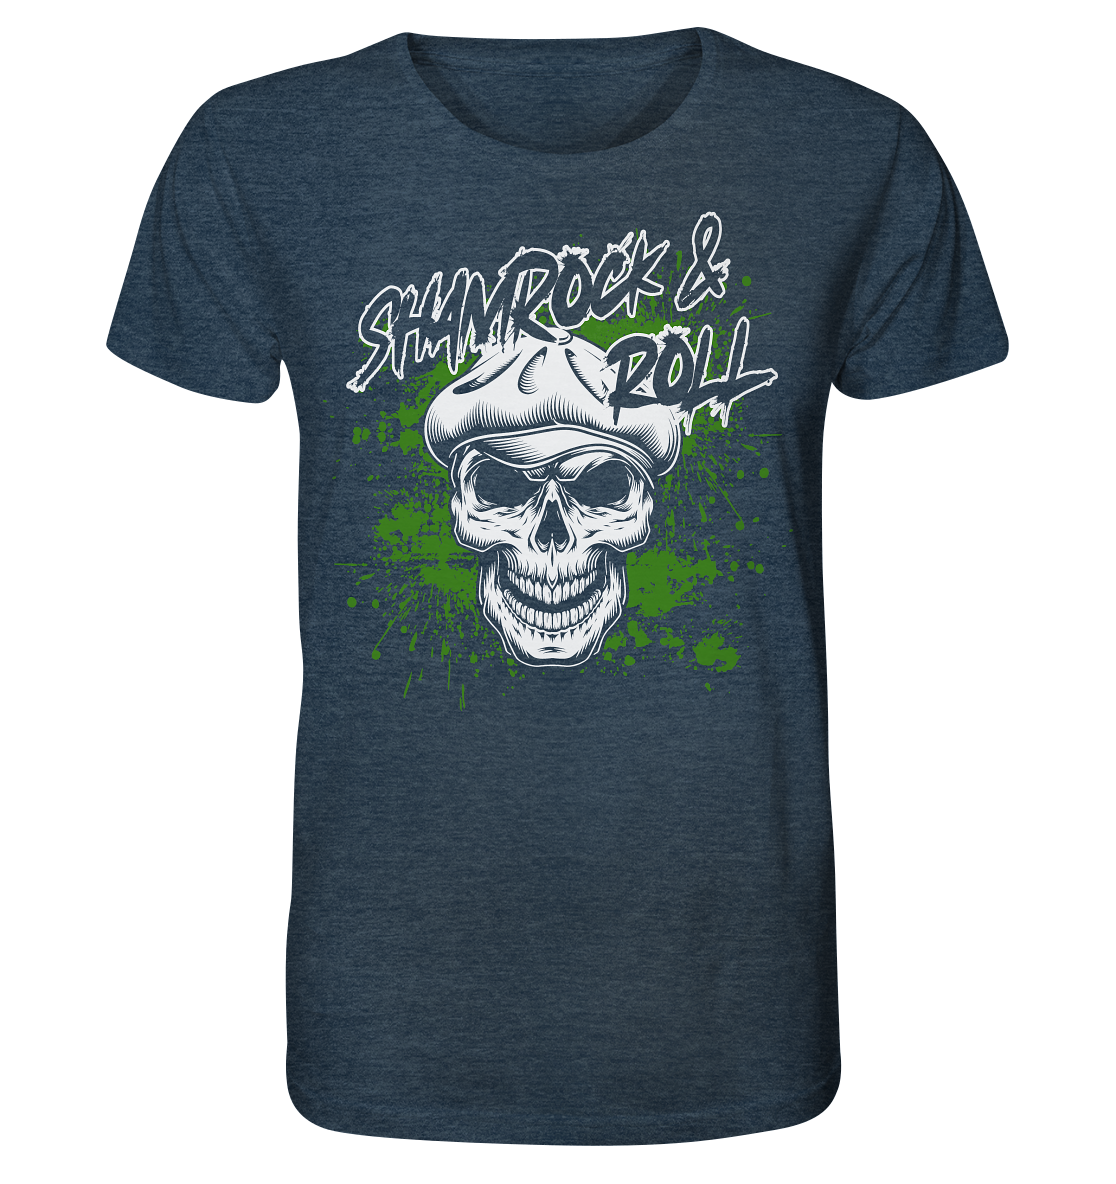 Shamrock And Roll "Skull" - Organic Shirt (meliert)